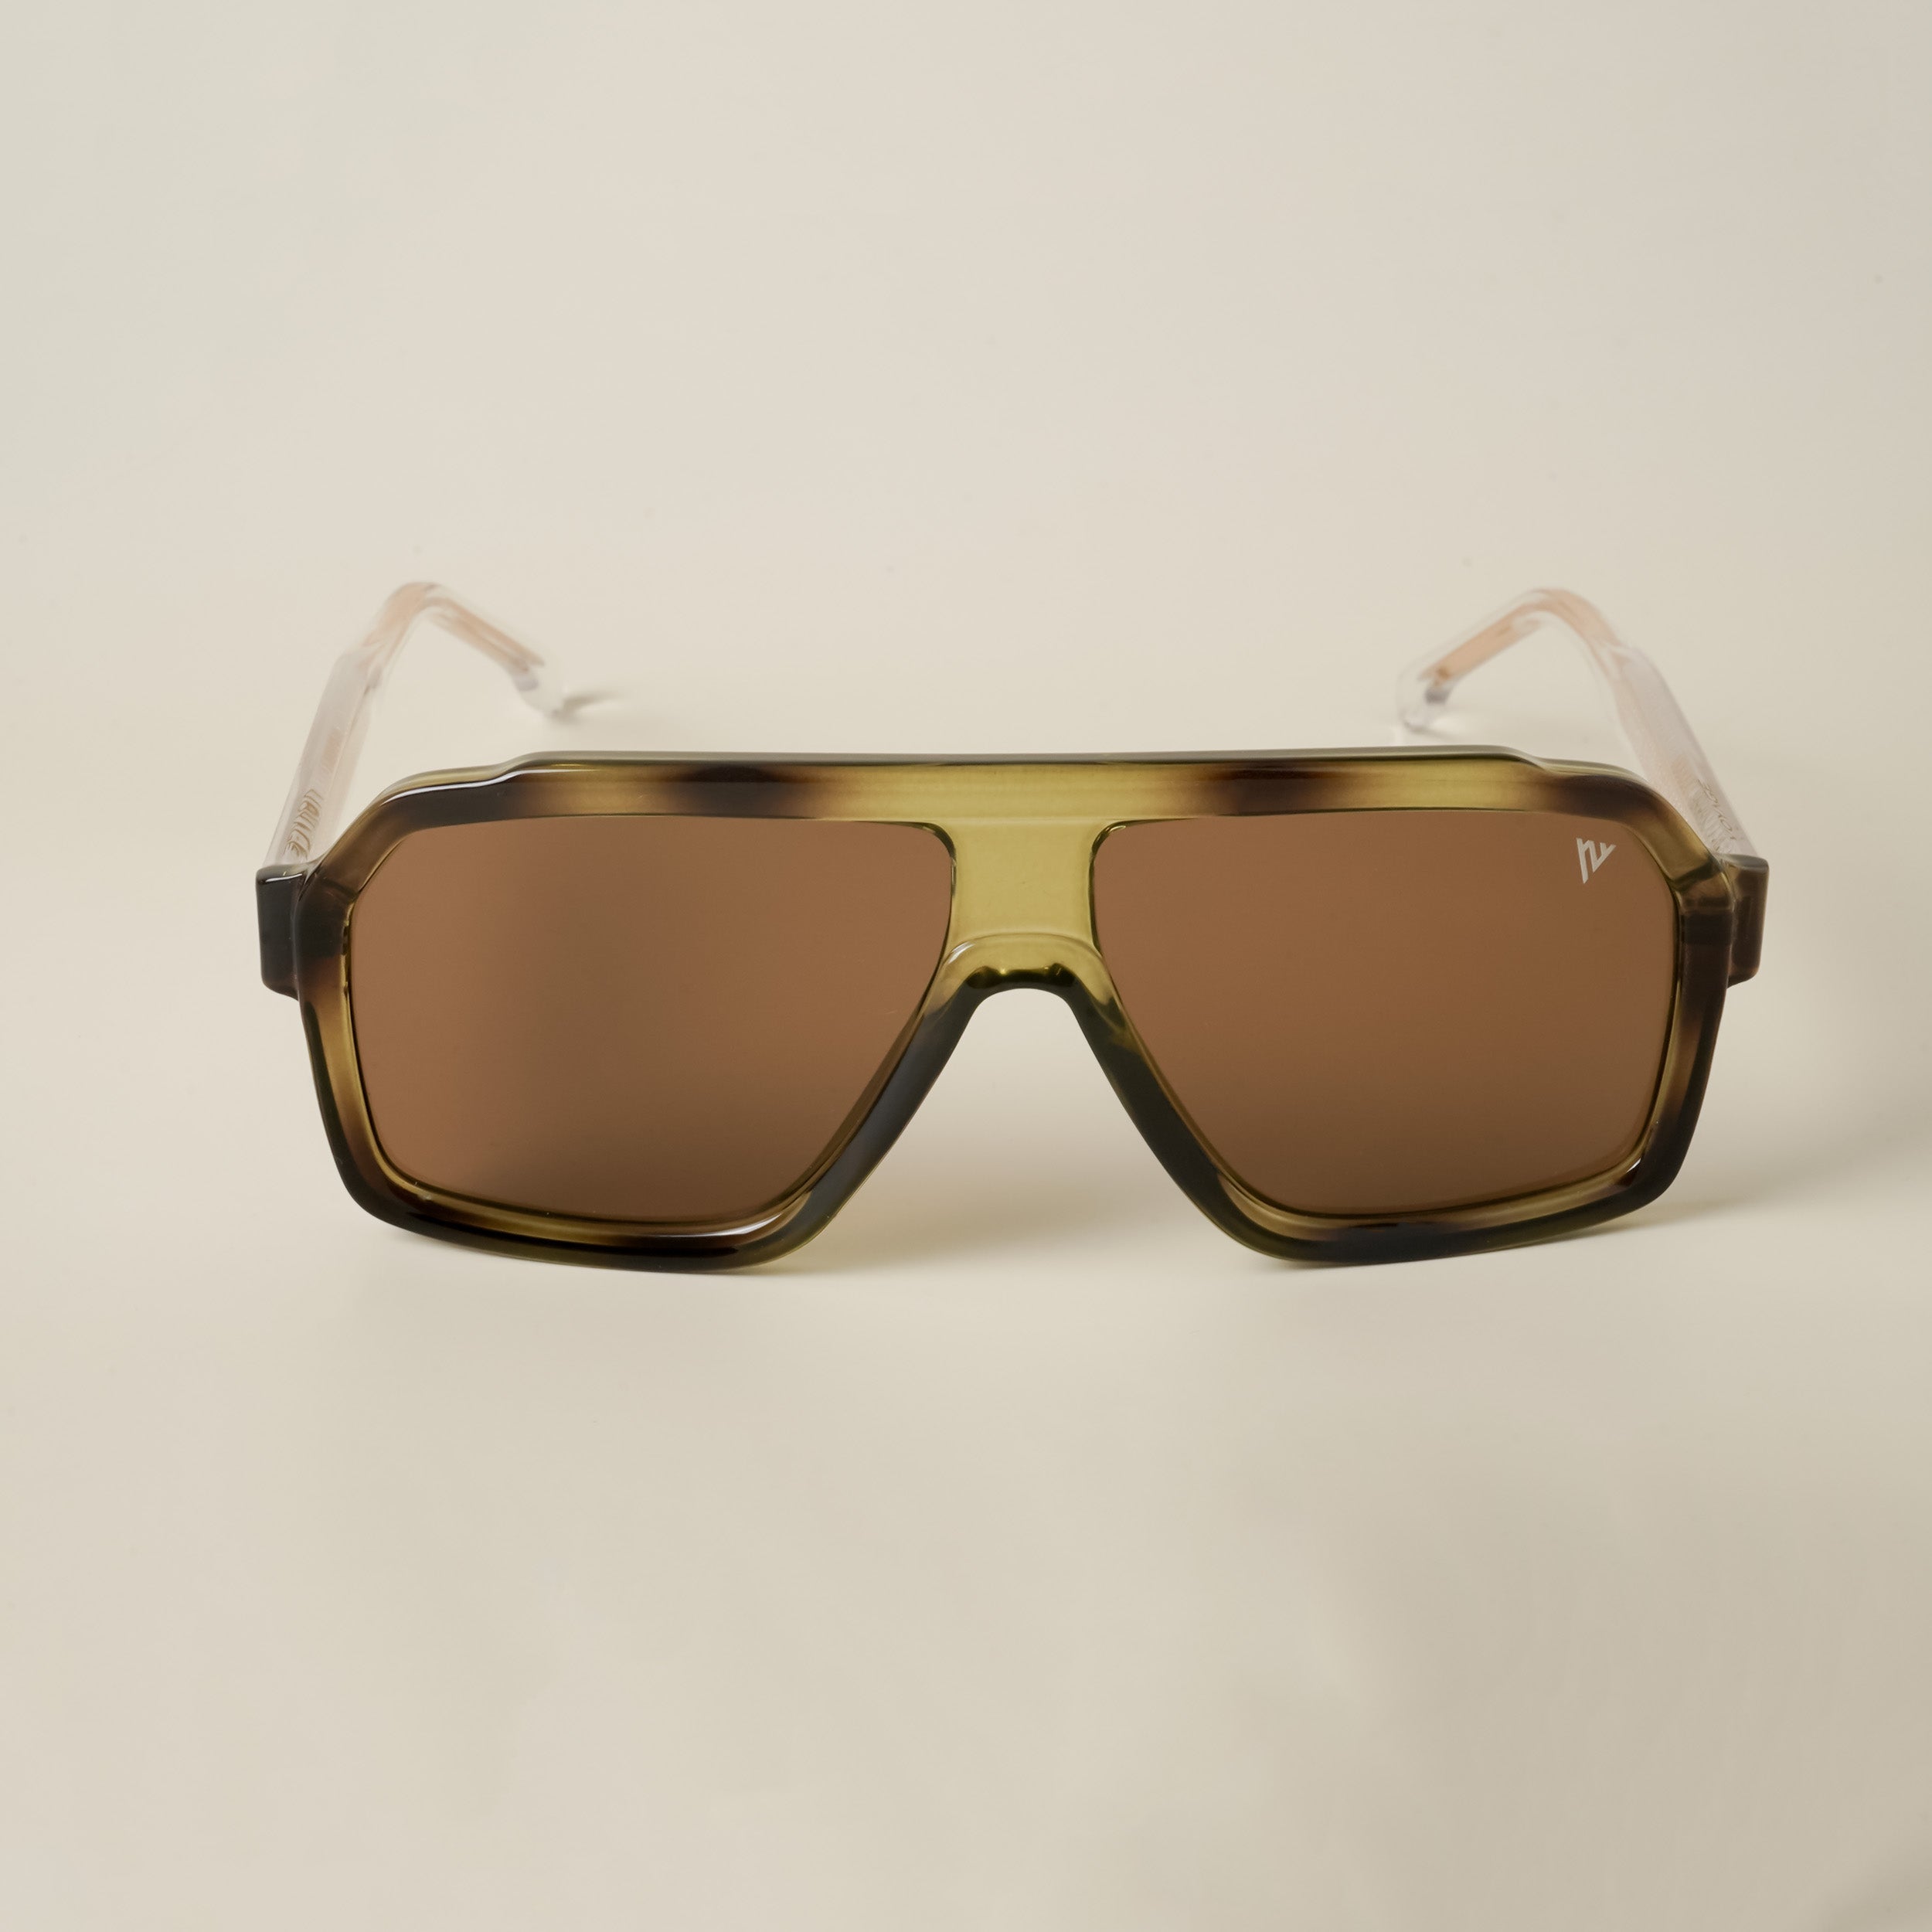 Voyage Brown Wrap Around Sunglasses for Men & Women (58974MG4746)